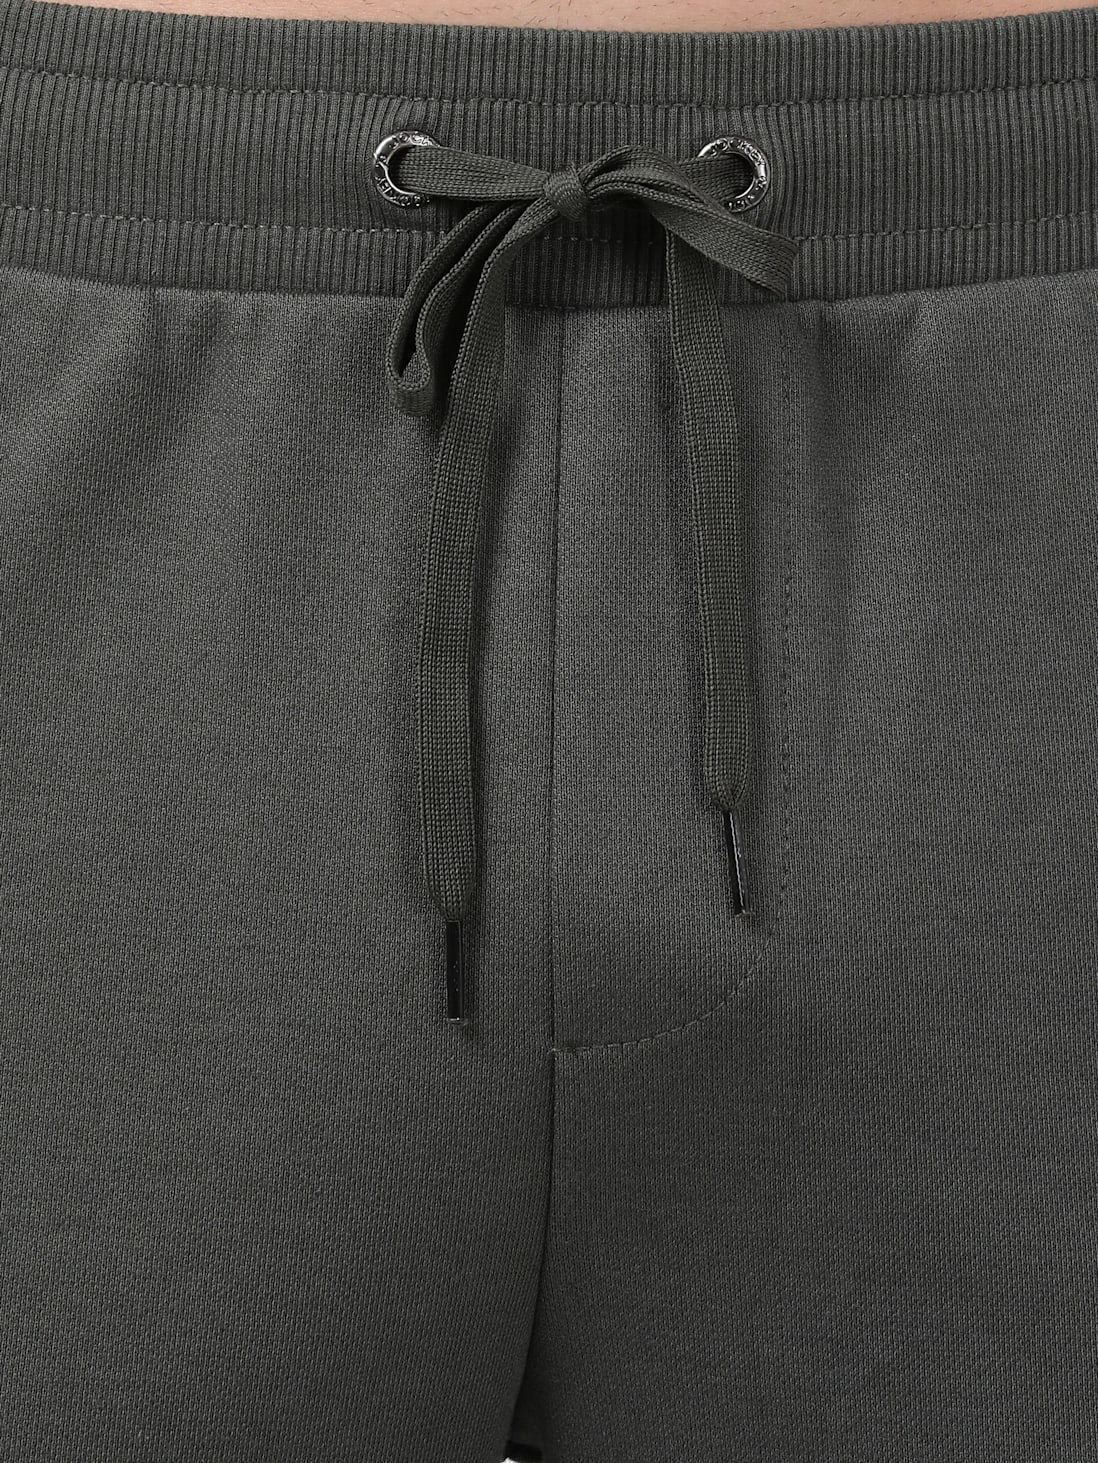 Buy Men's Super Combed Cotton Rich Pique Interlock Fabric Slim Fit ...